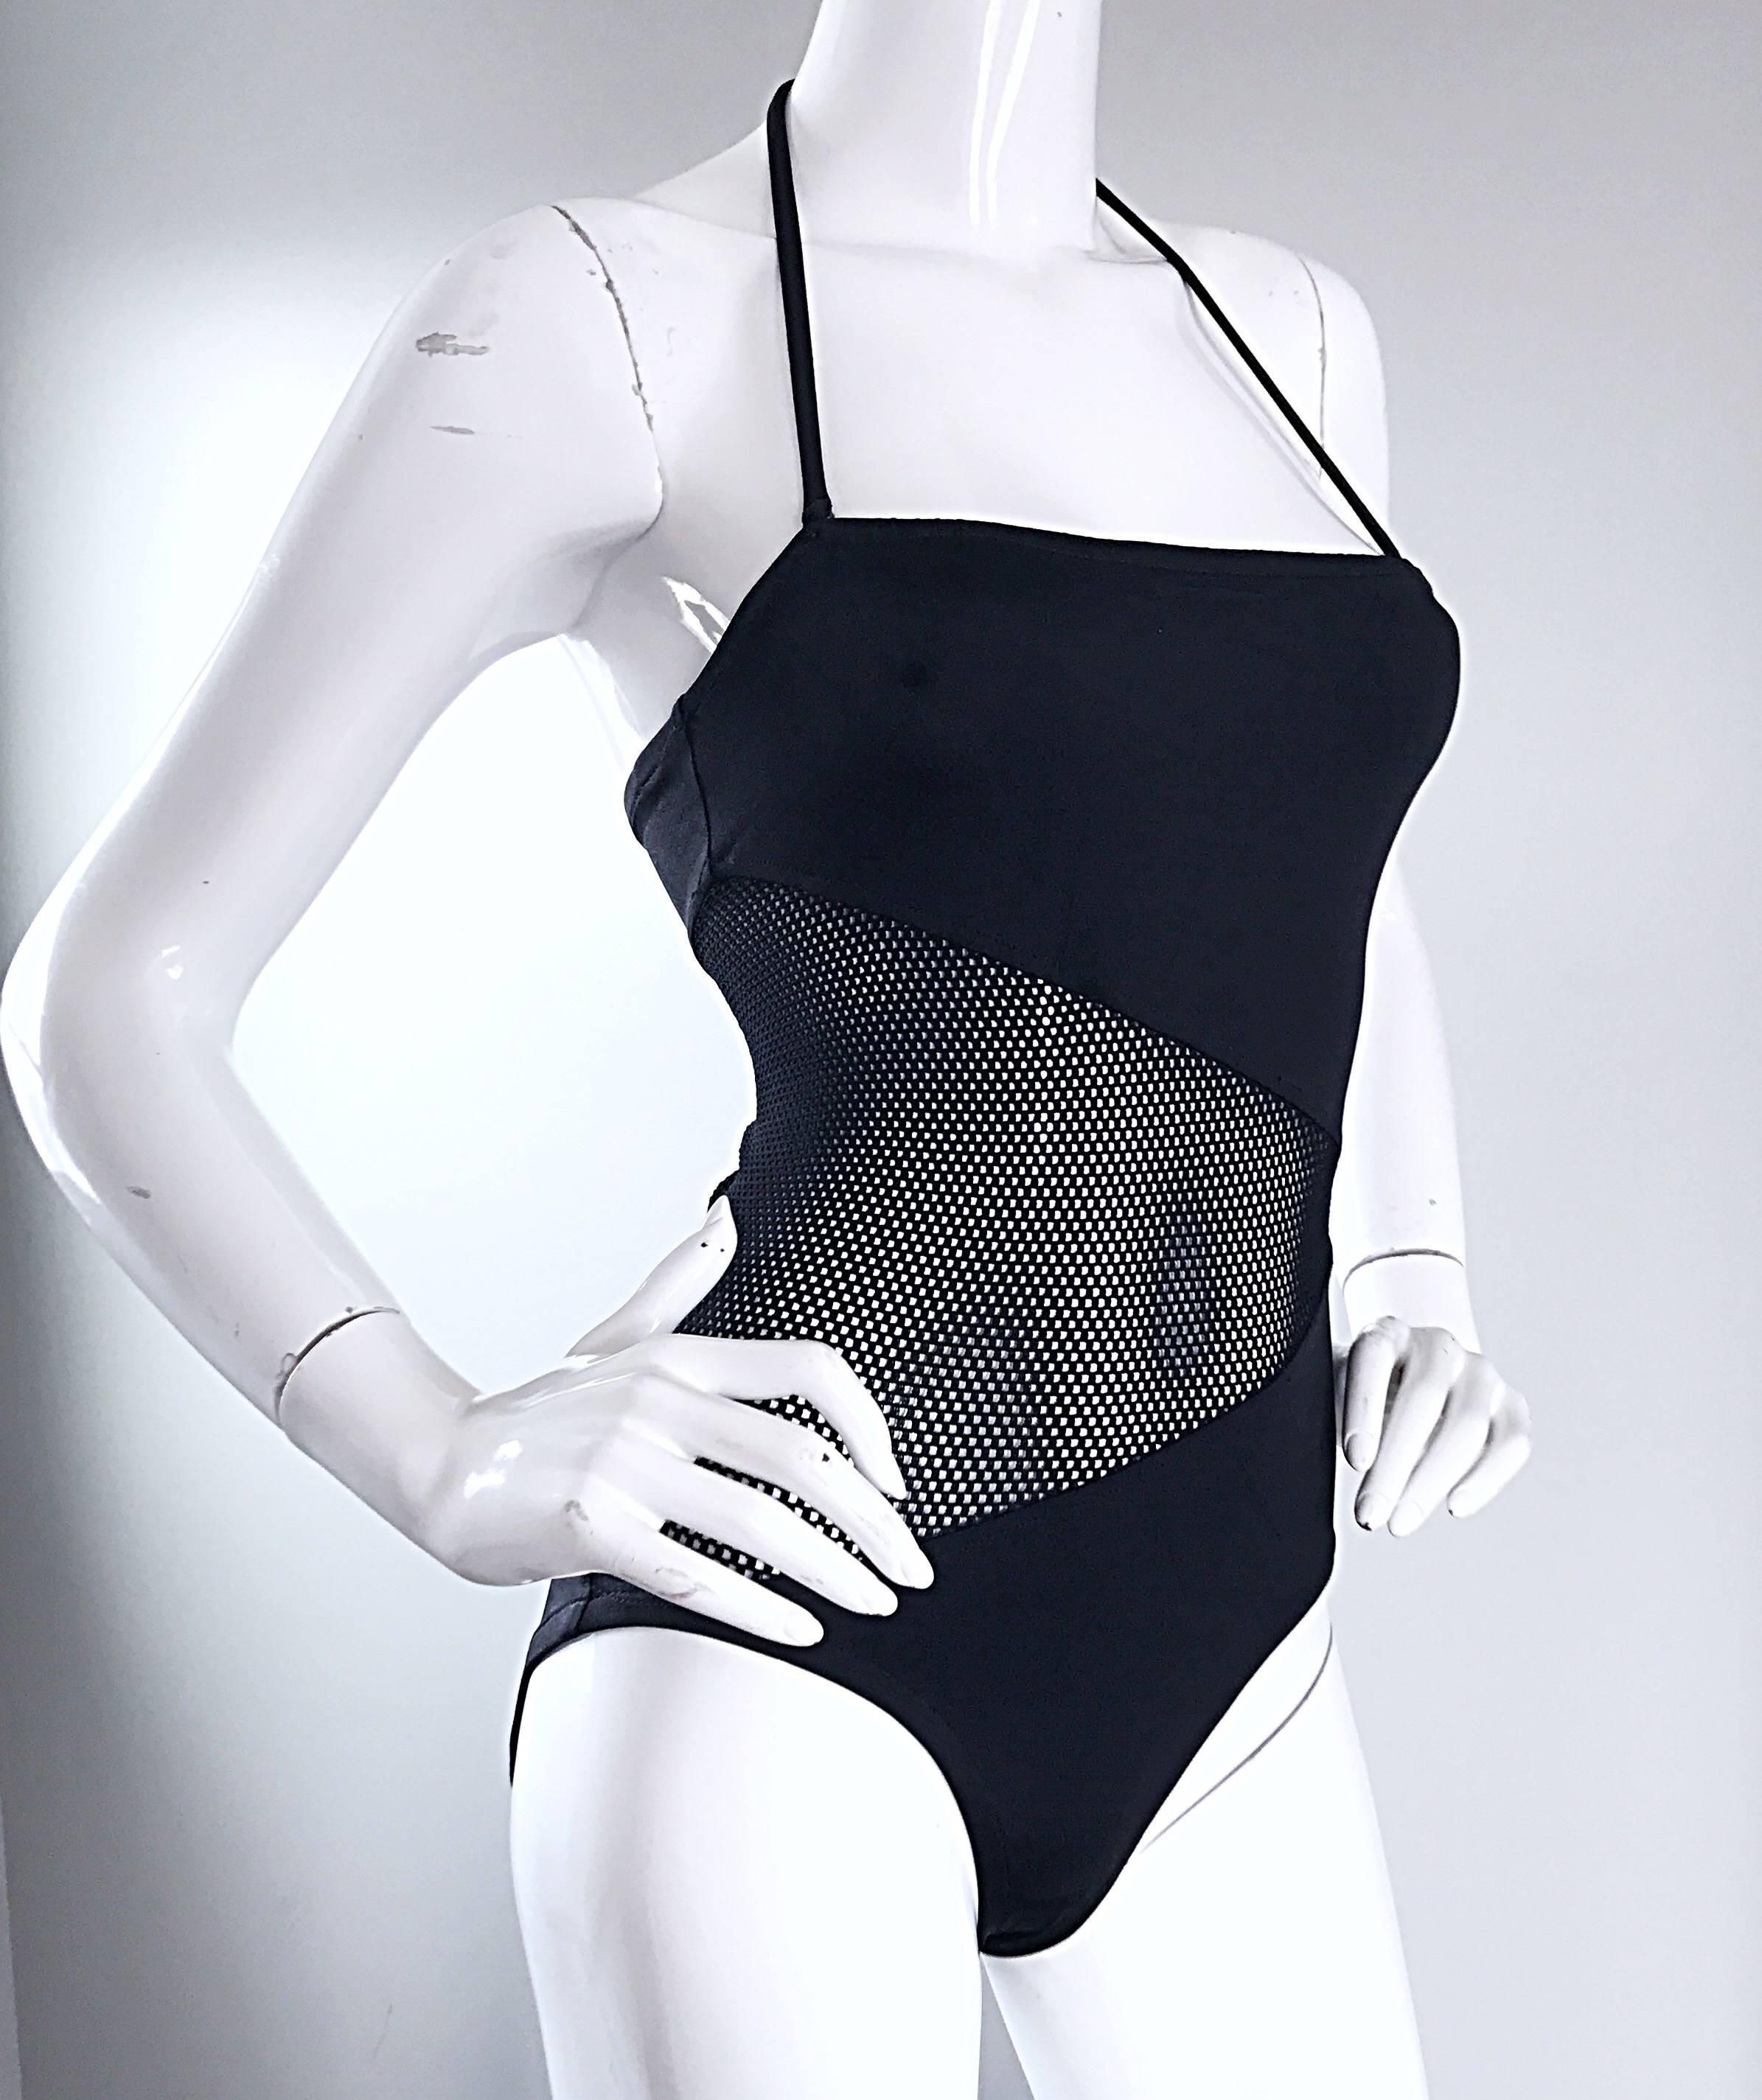 black cutout bodysuit